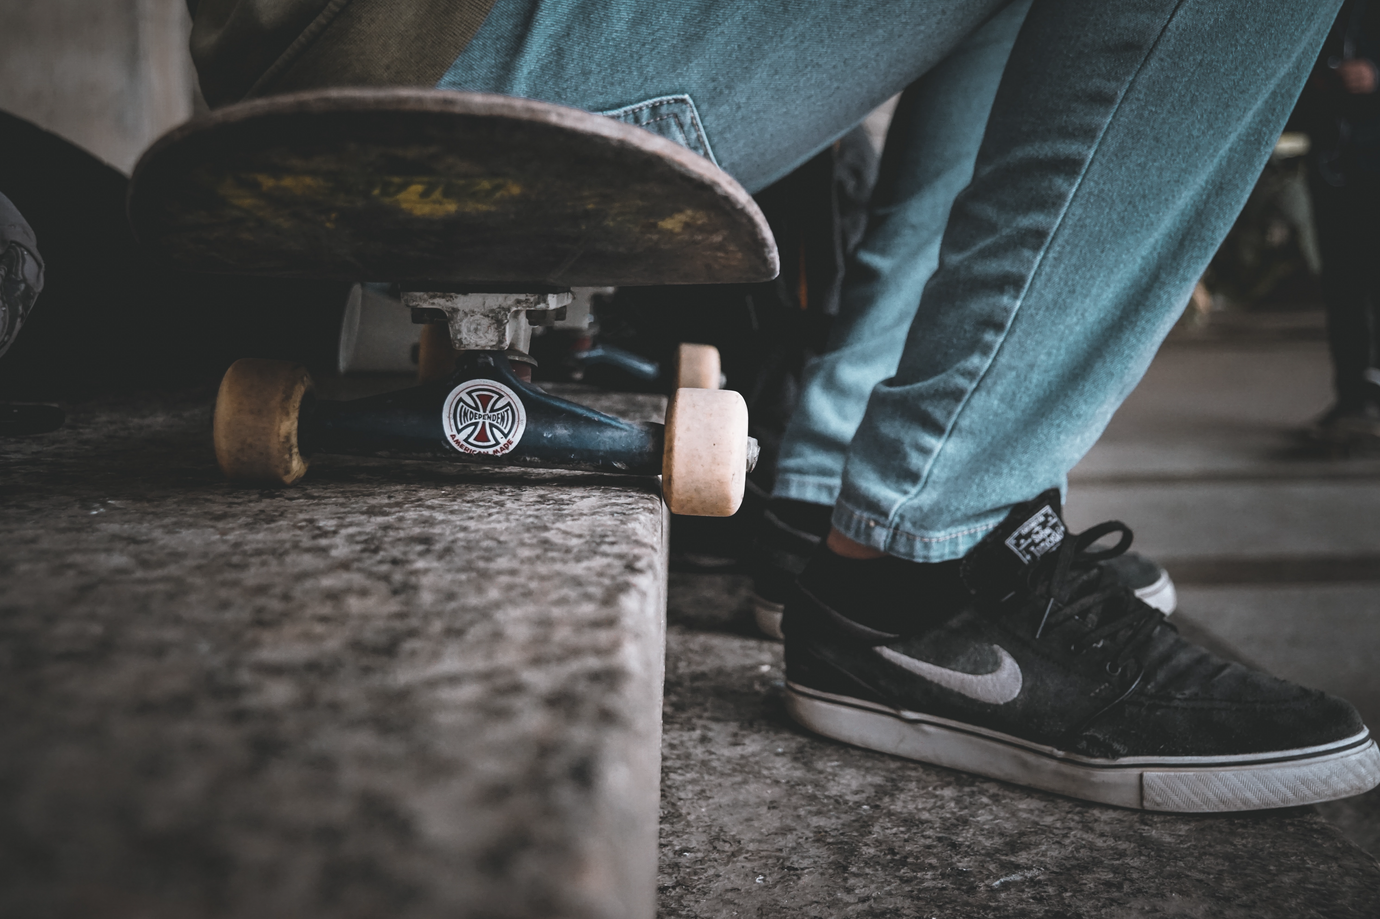 The skateboard track